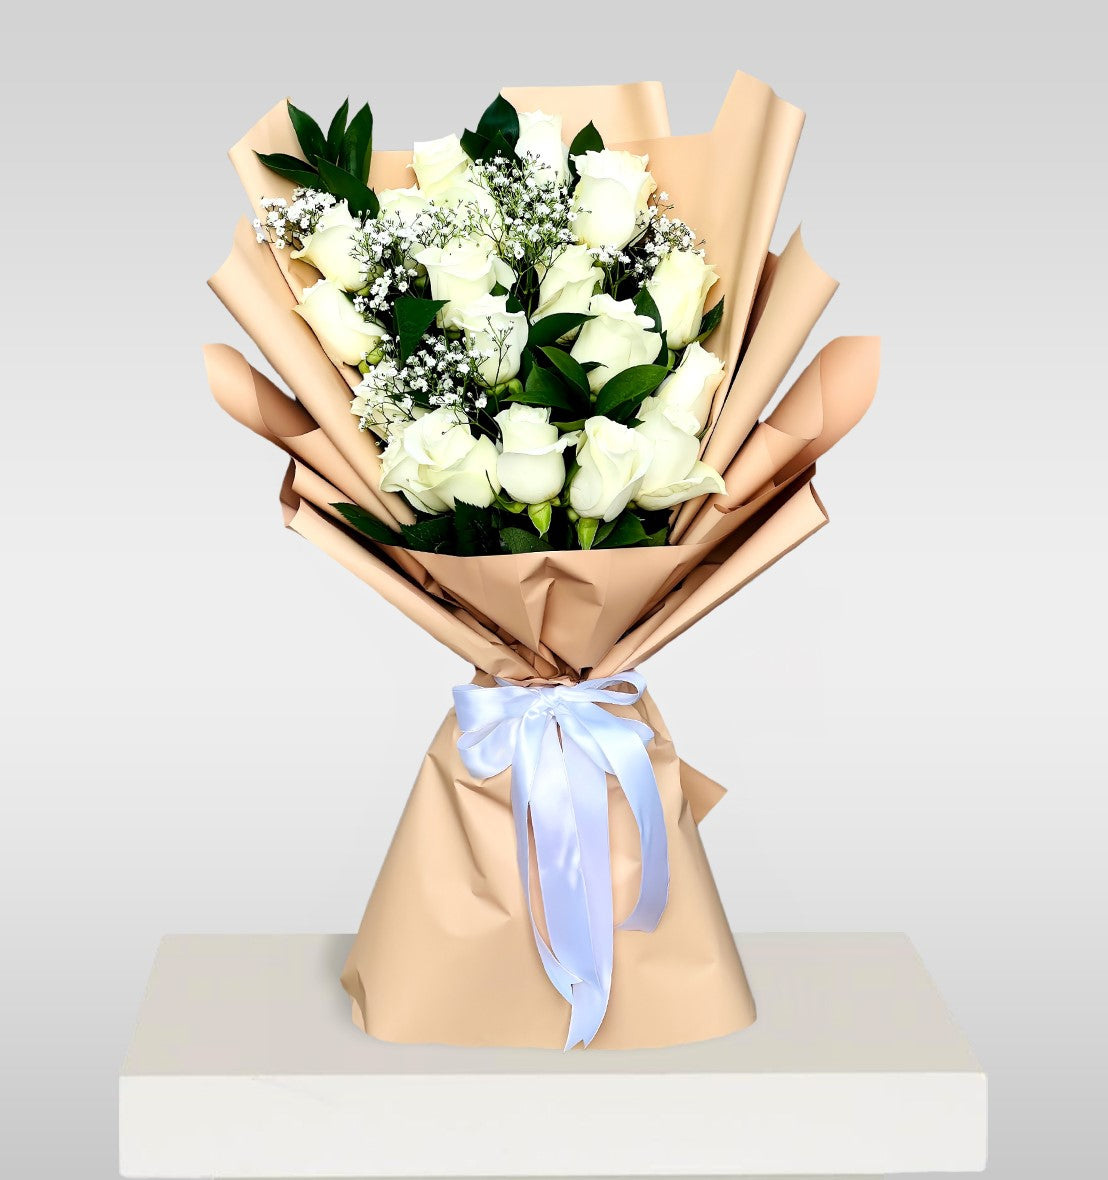 Anniversary Flowers - White Roses Bouquet - 15 Stems - Fresh Cut Flowers